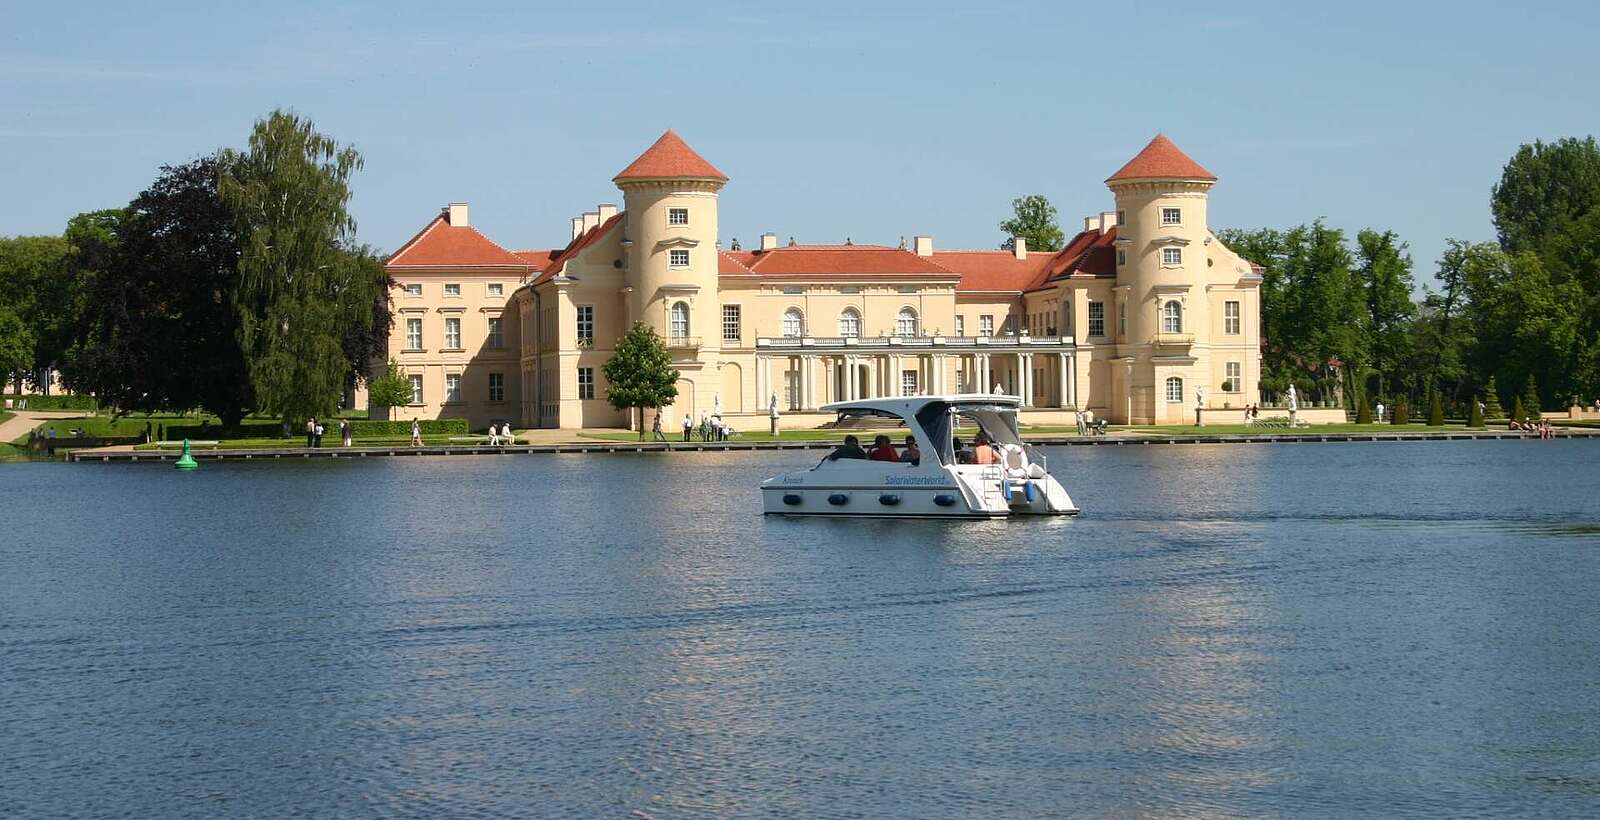 Motorboot vor Schloss Rheinsberg,
        
    

        Picture: Tourismusverband Ruppiner Seenland e.V./Judith Kerrmann